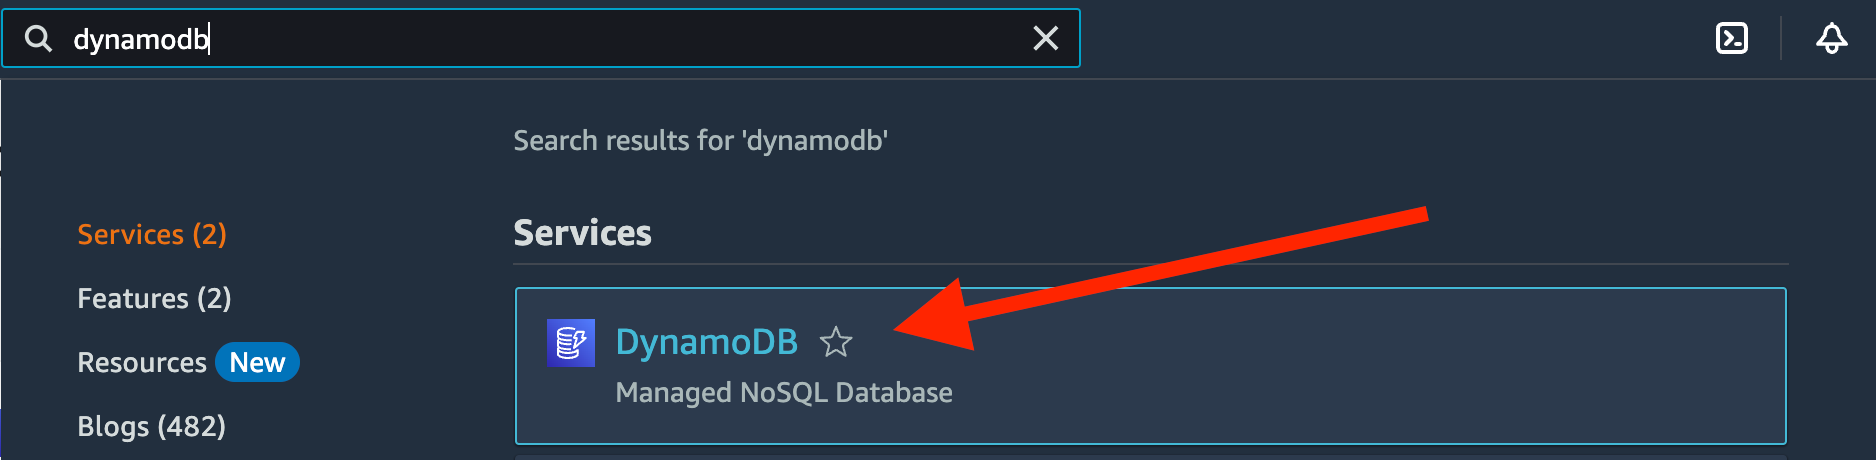 Add DynamoDB to Go Serverless Backend with Terraform